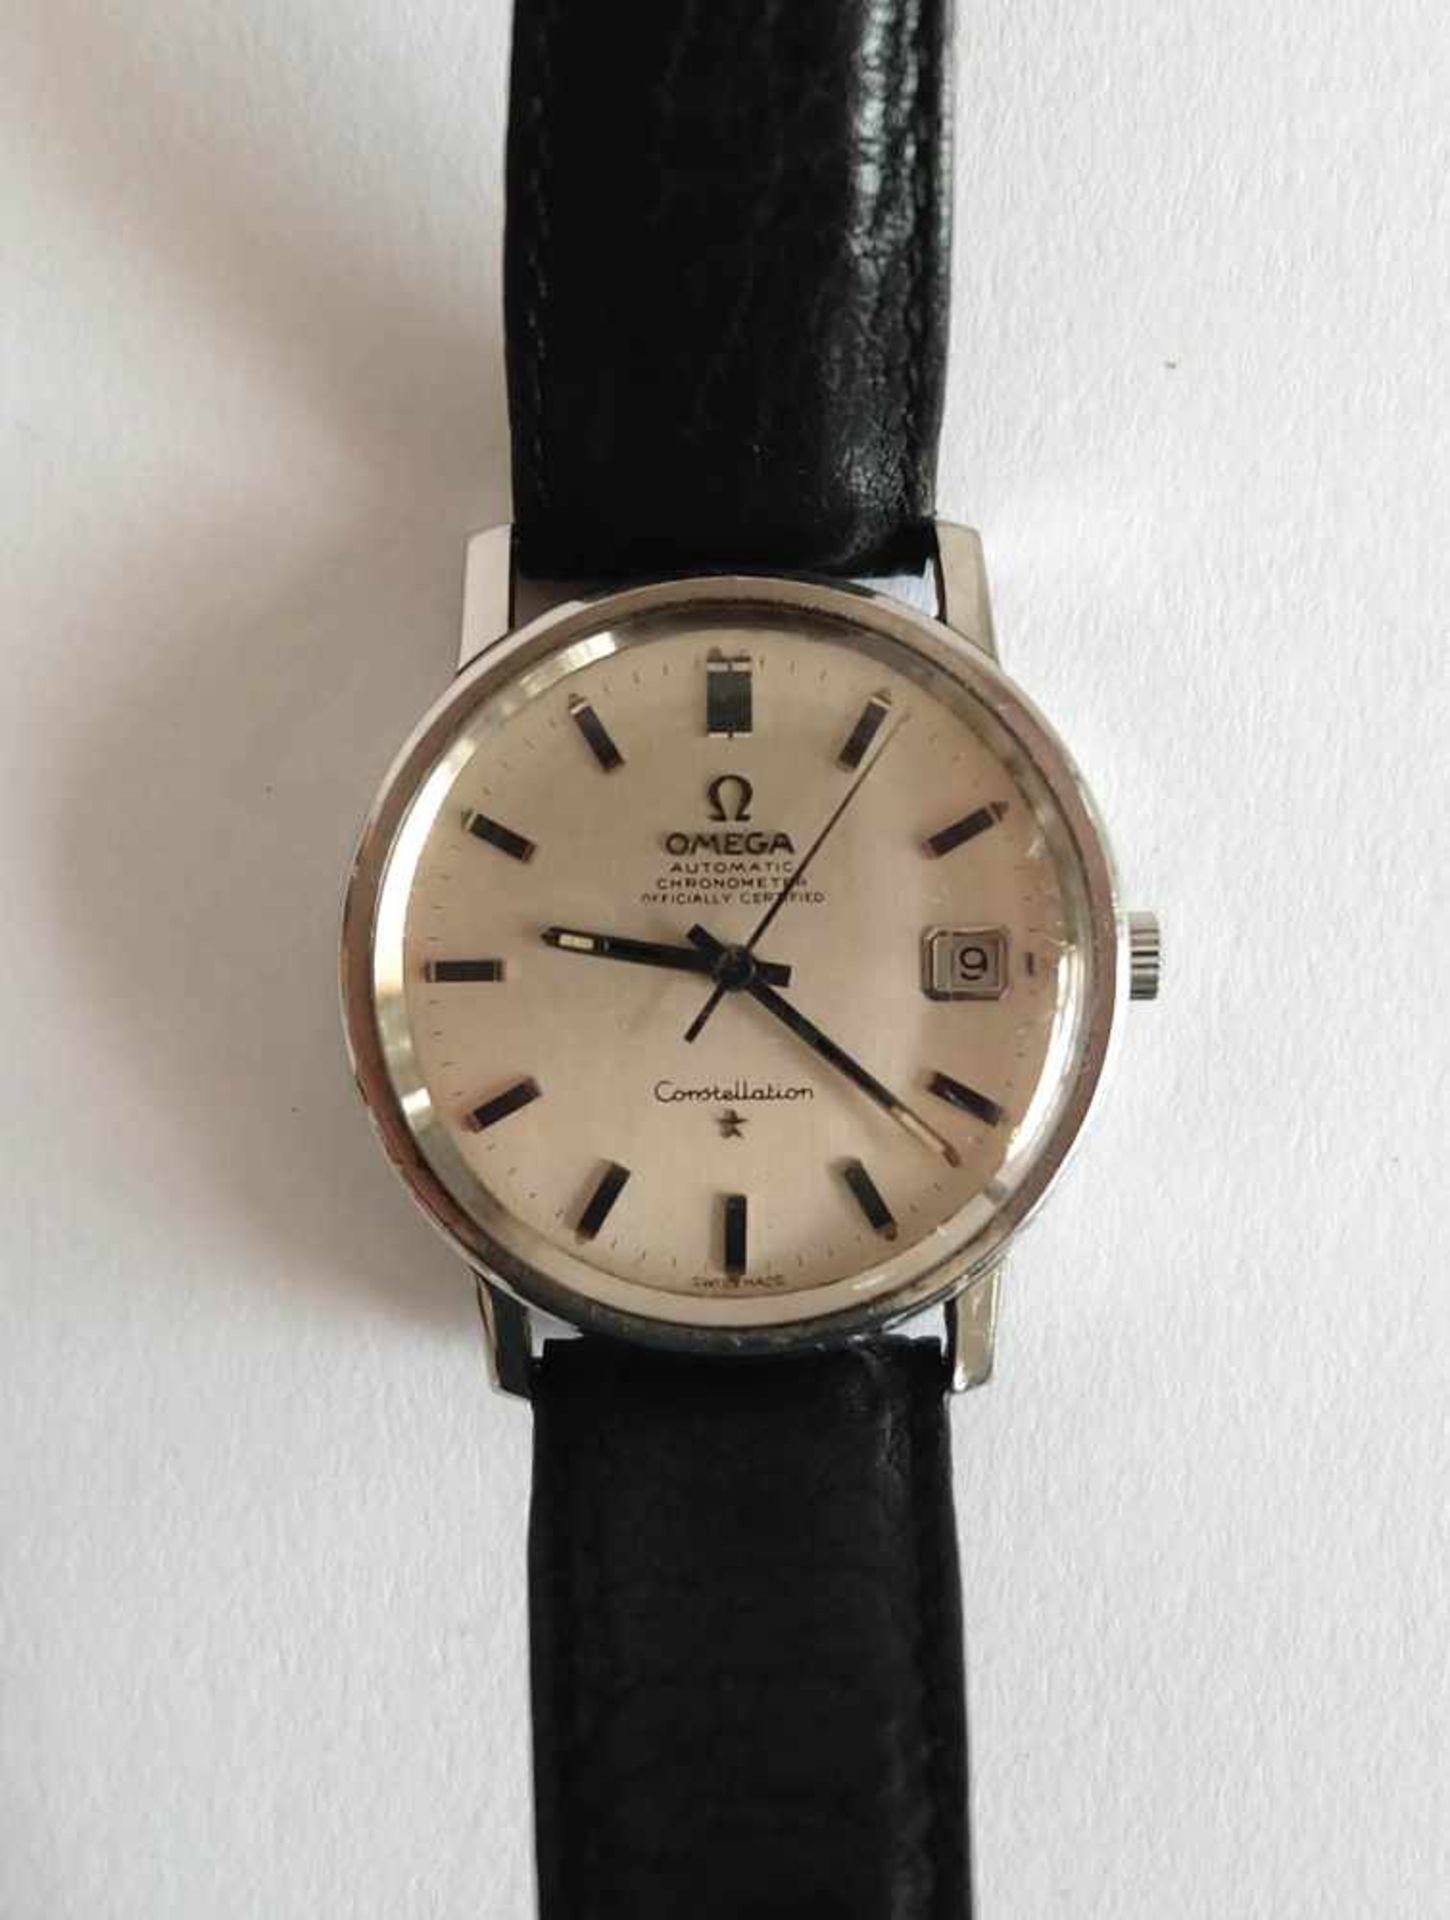 HAU, Hersteller Omega/ Biel, 1960er-Jahre, Modell Constellation, Automatic Chronometer Officially